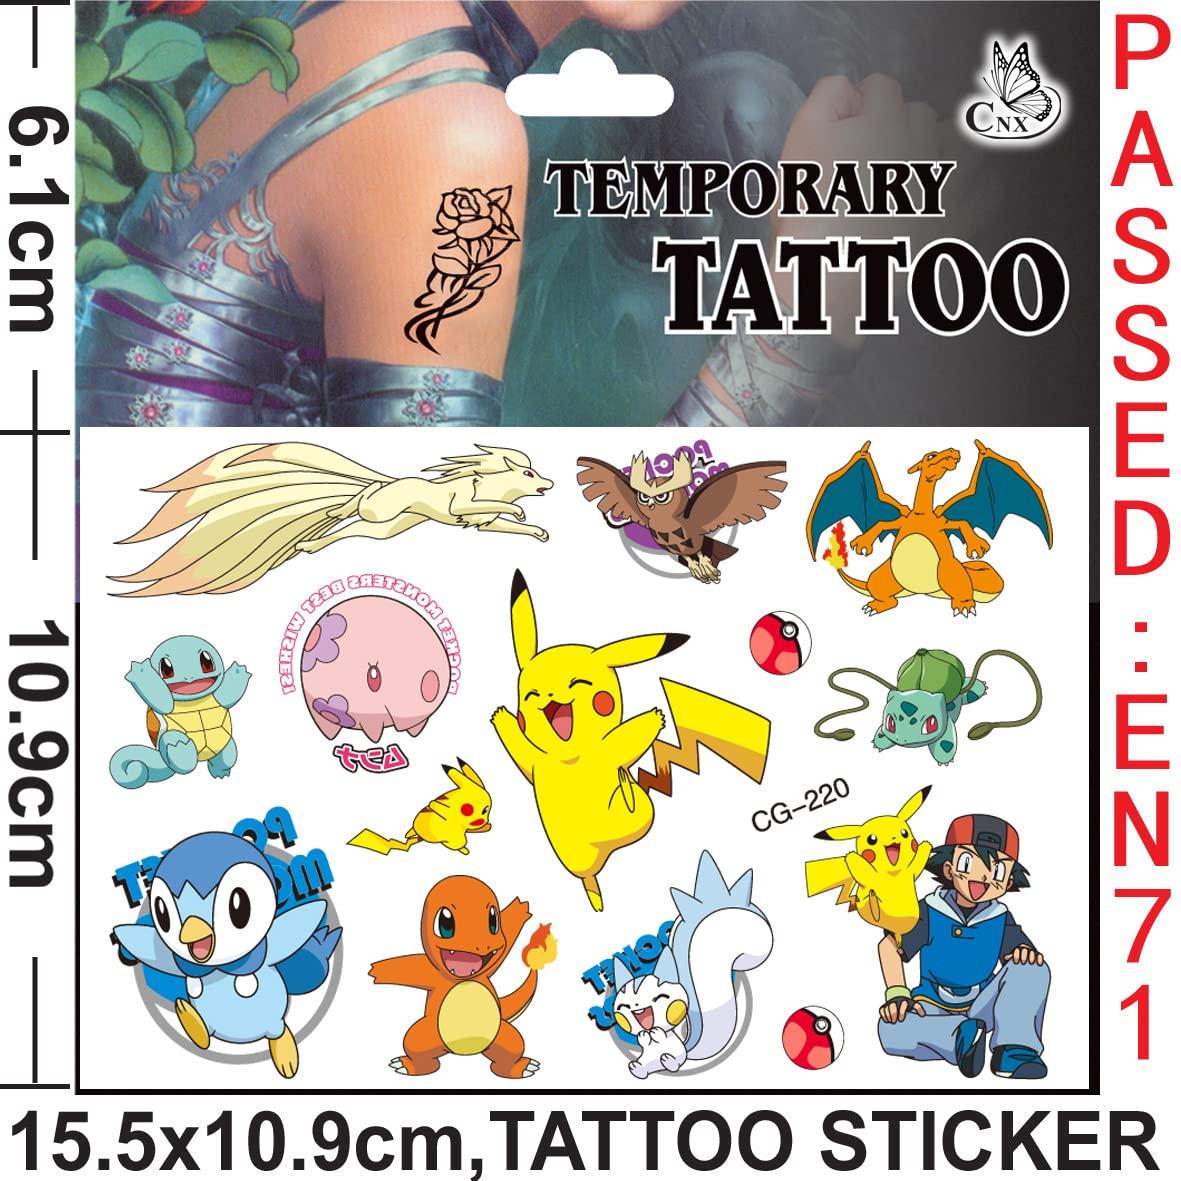 3 awesome Pokémon Tattoos | Pokémon Amino